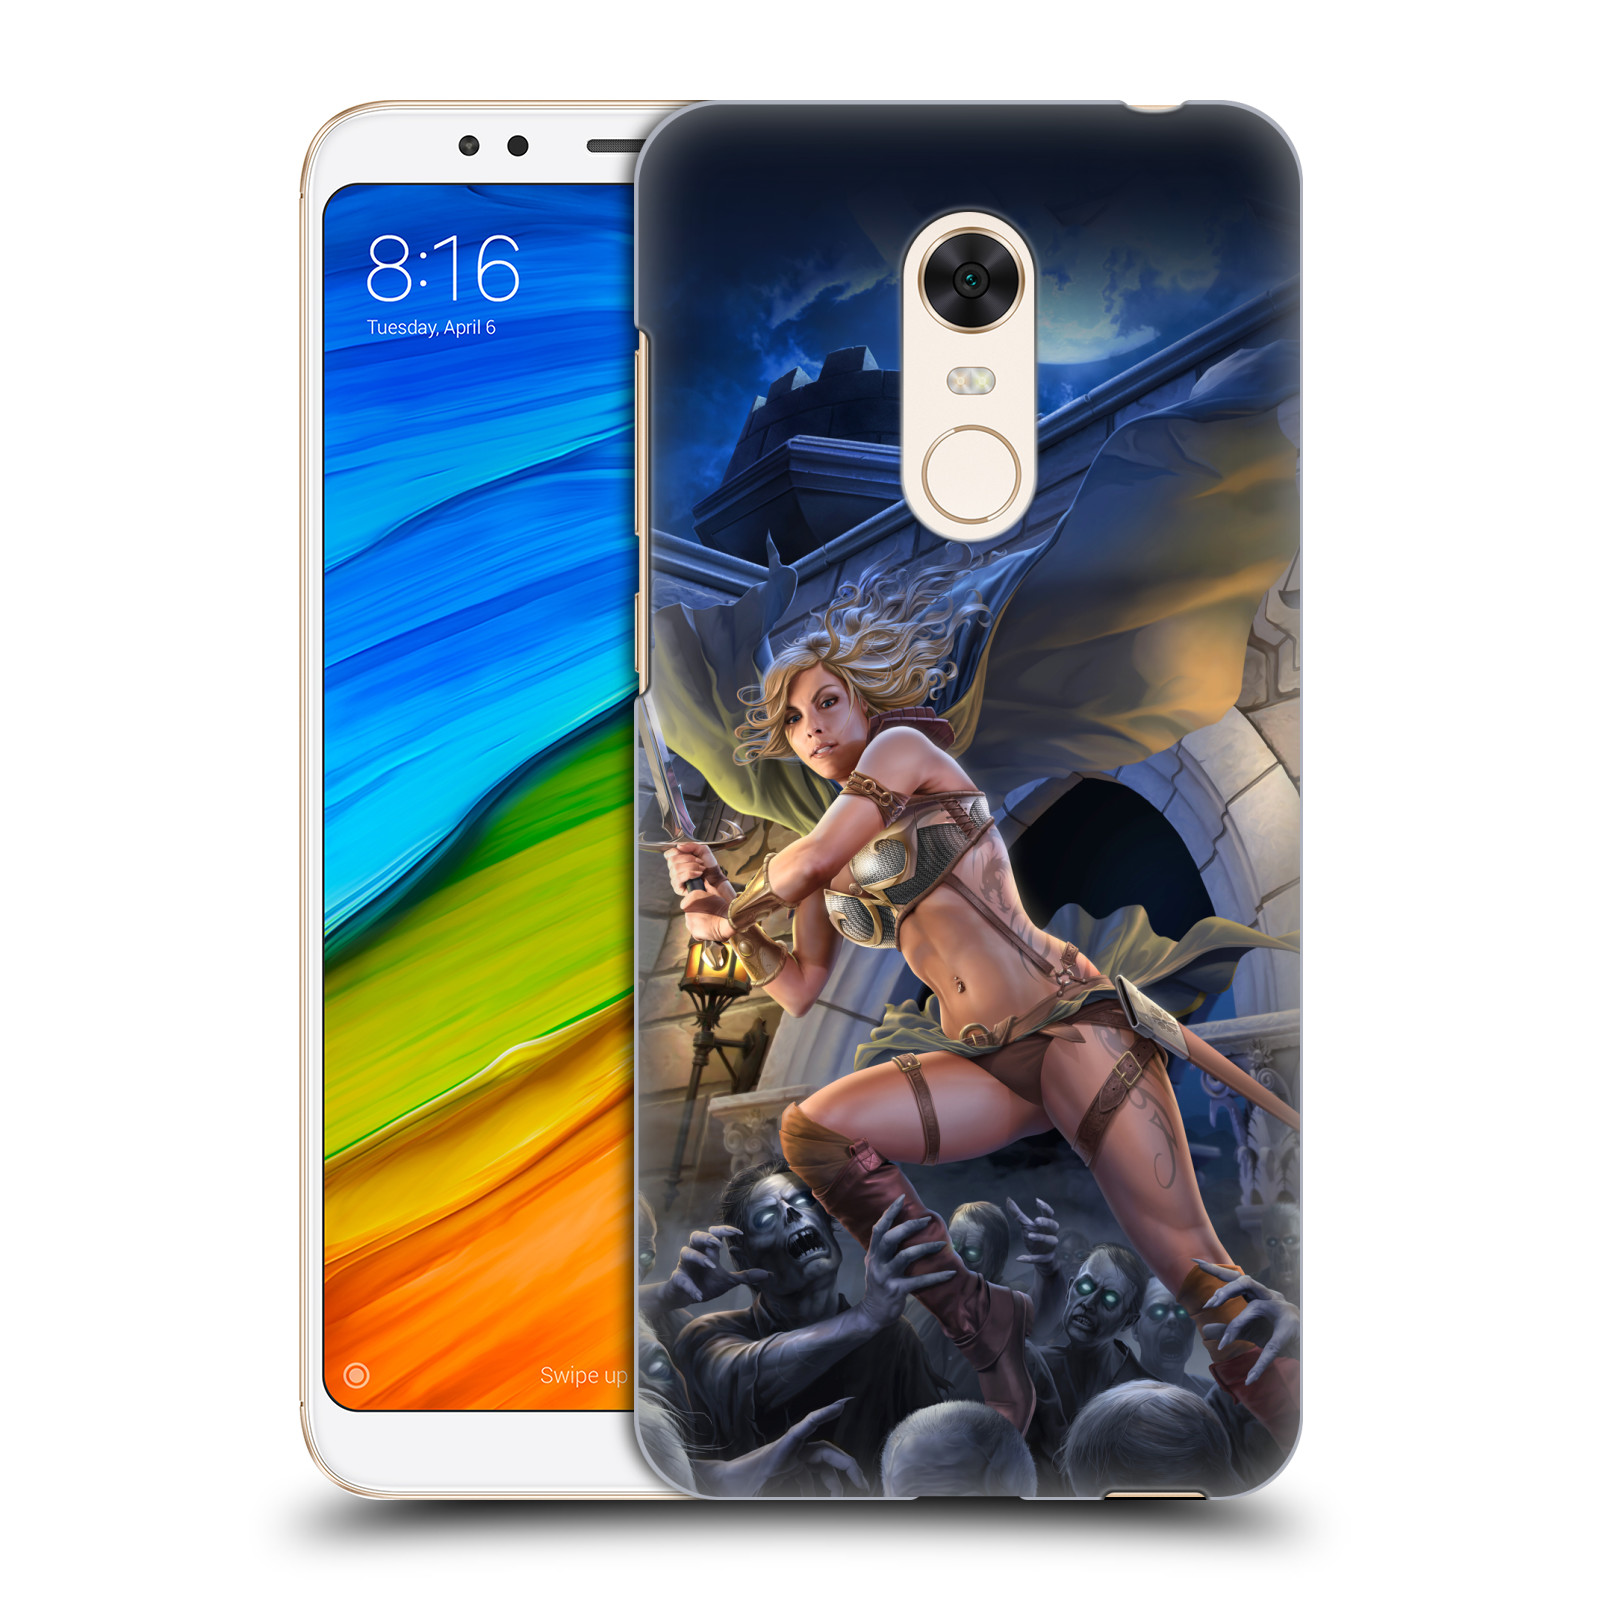 Pouzdro na mobil Xiaomi Redmi 5 PLUS (REDMI 5+) - HEAD CASE - Fantasy kresby Tom Wood - Princezna bojovnice a zombies